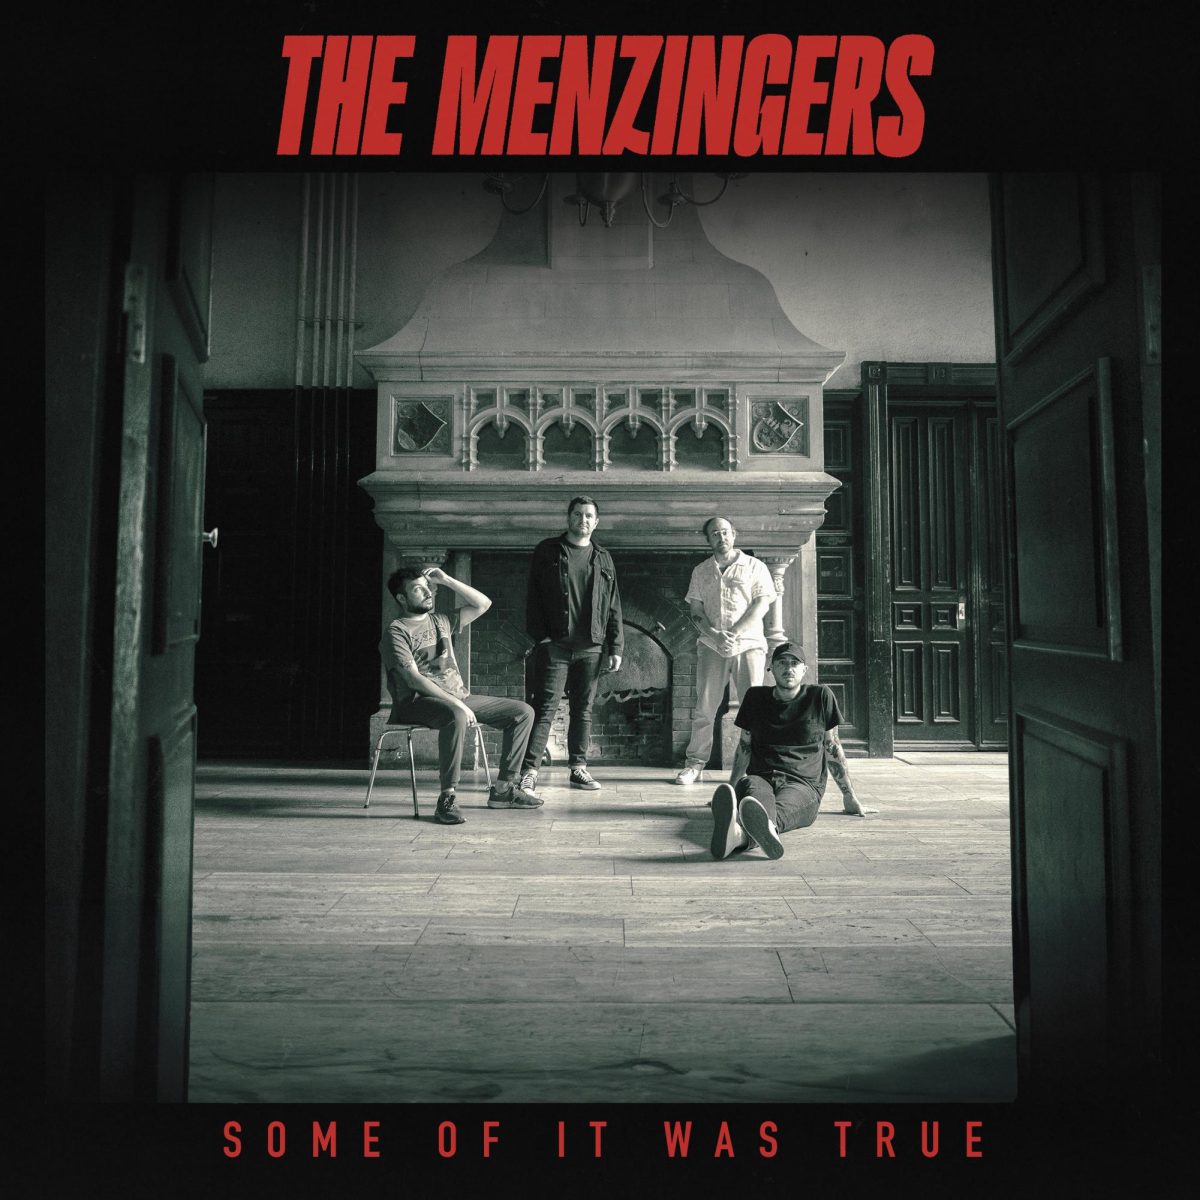  The Menzingers fall short for a punk rock album. Rating: C+